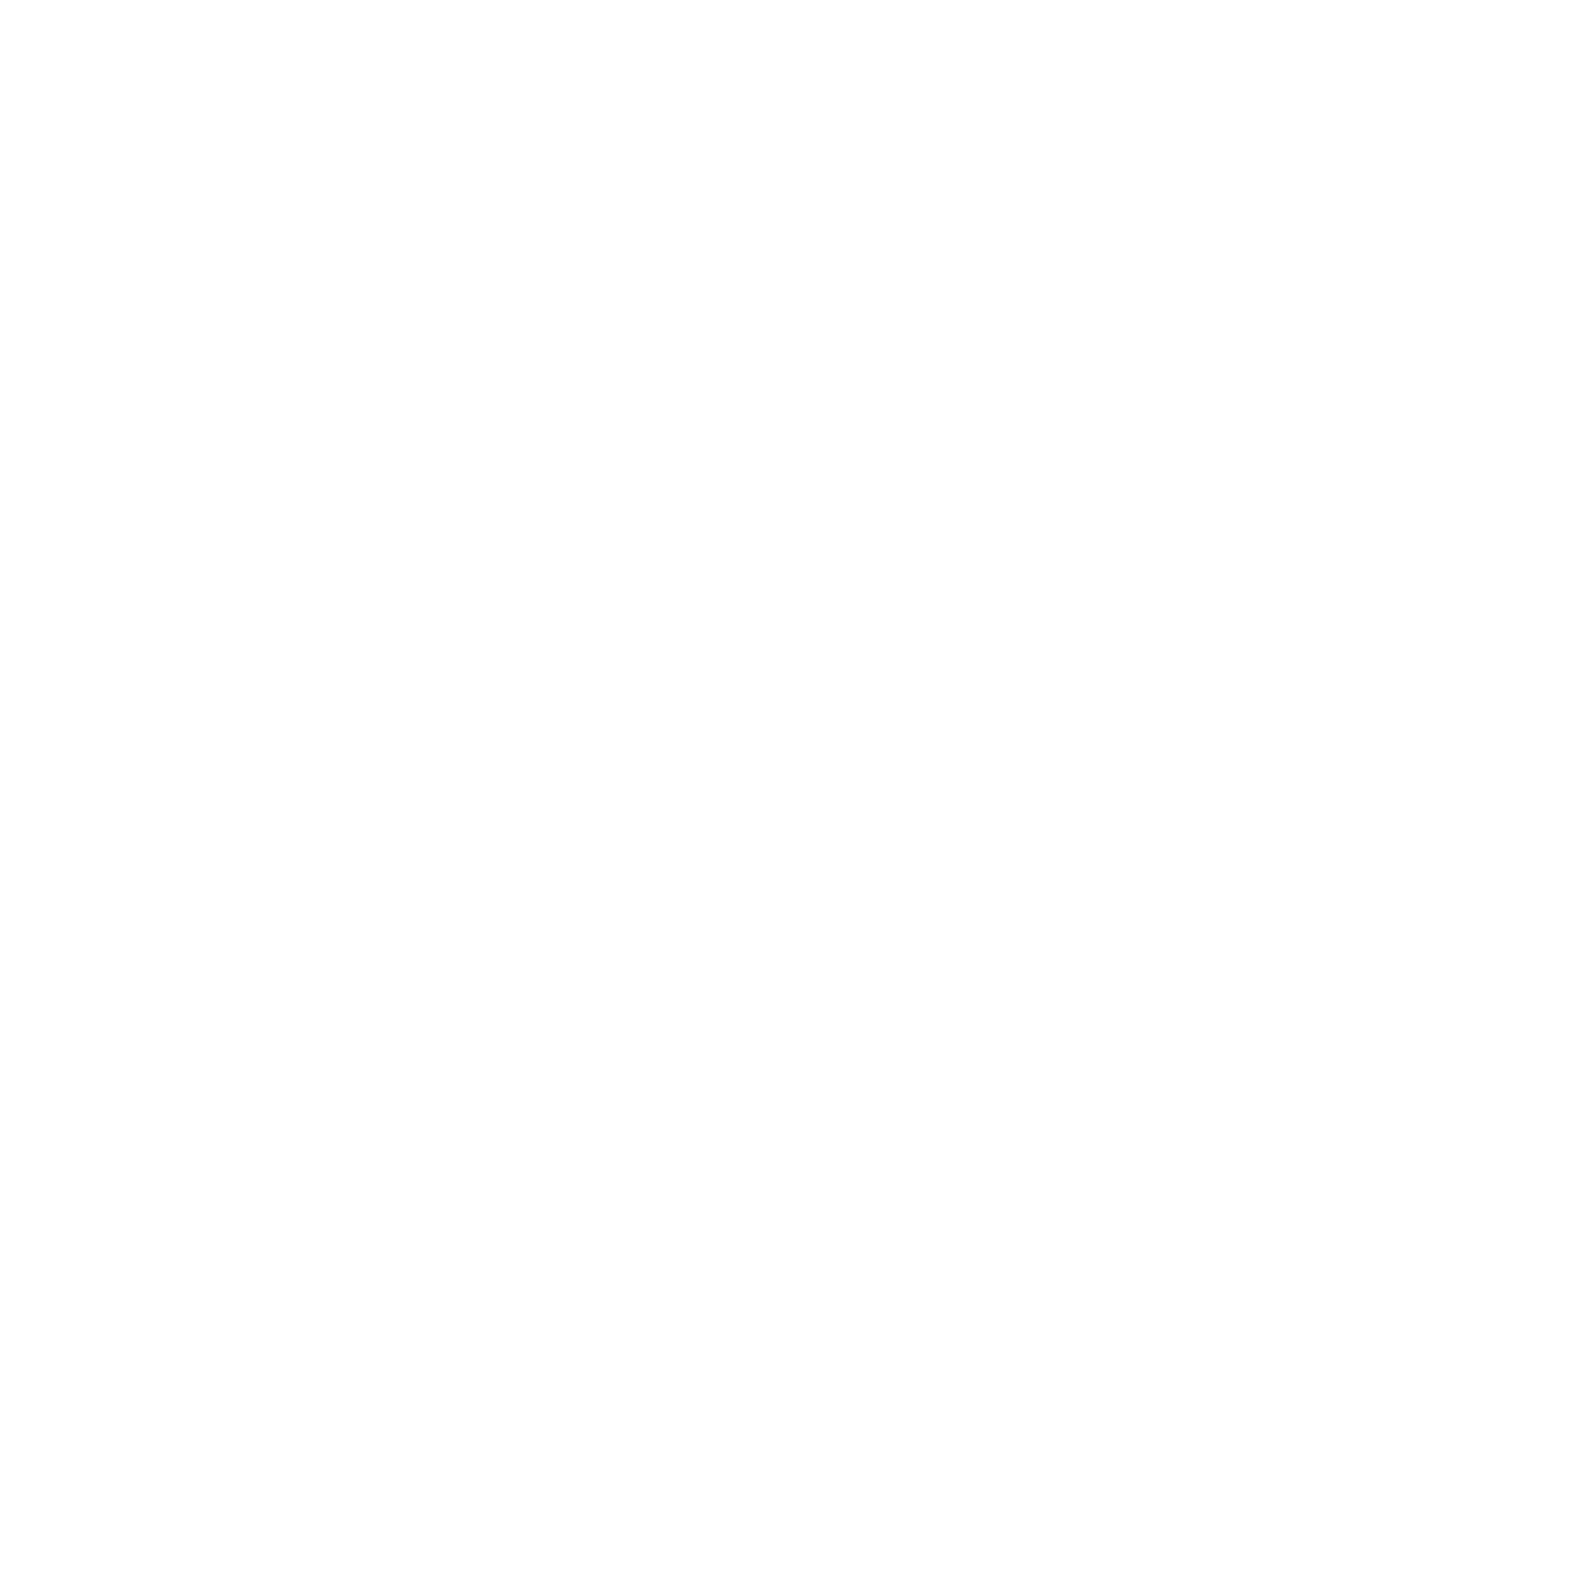 General Electric logo for dark backgrounds (transparent PNG)